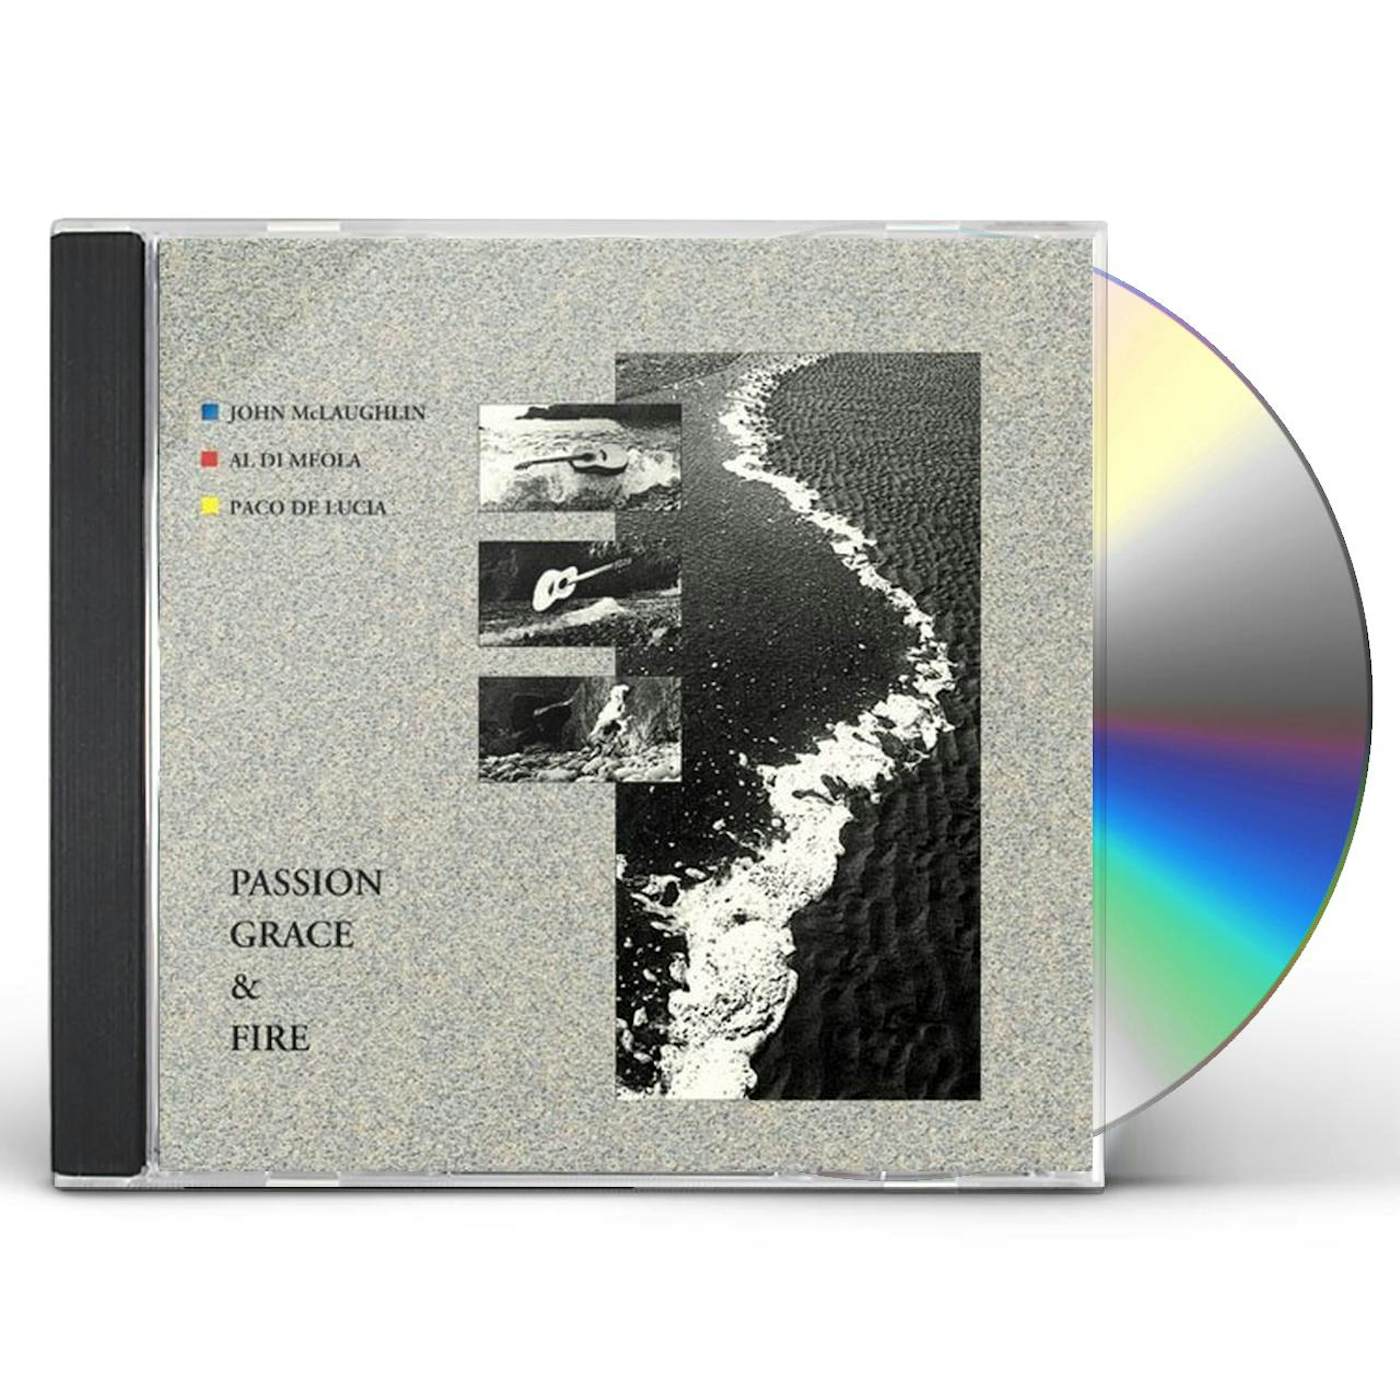 John McLaughlin PASSION GRACE & FIRE CD